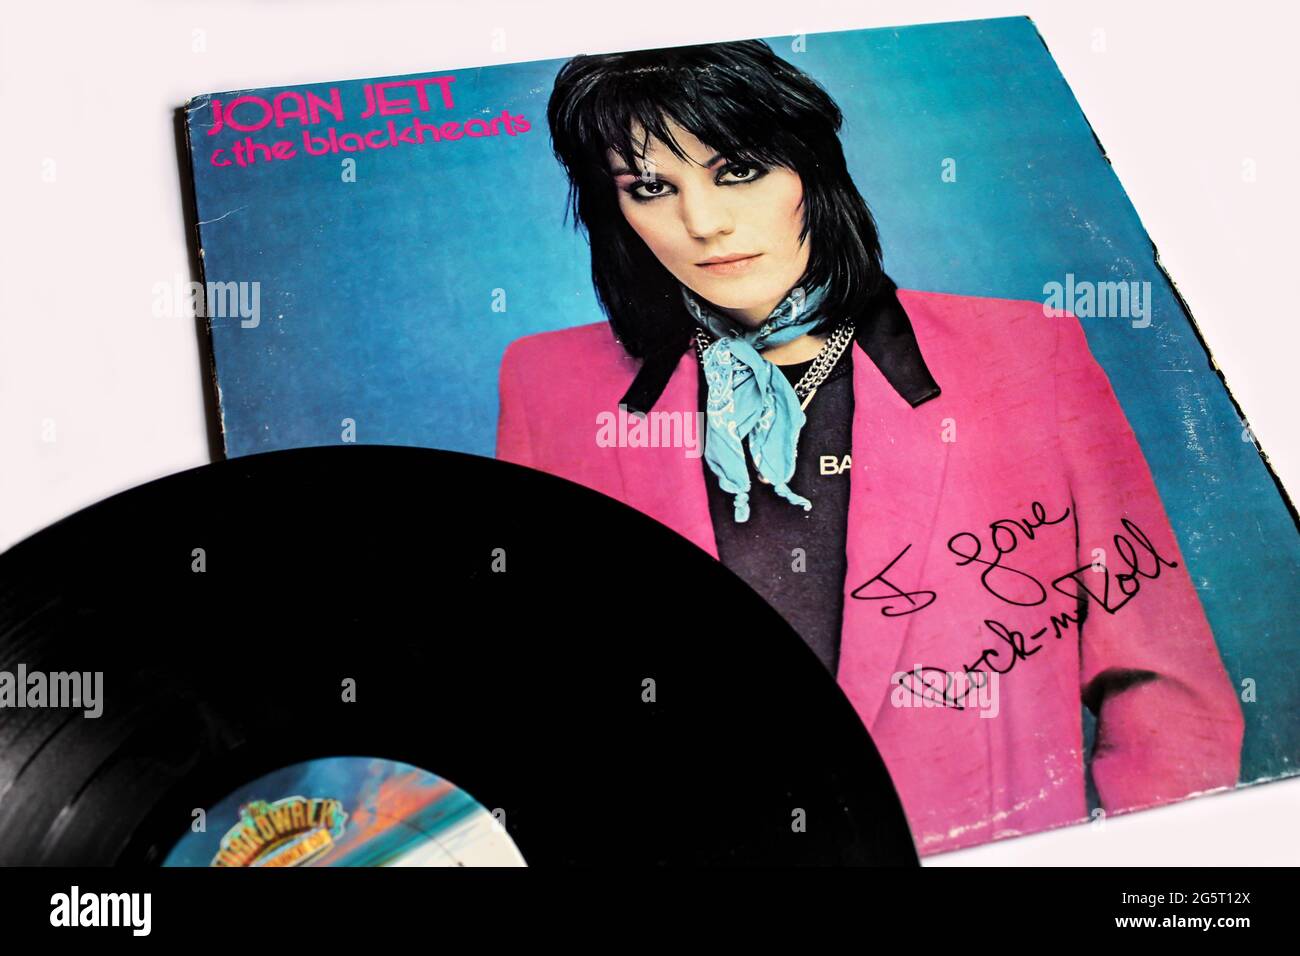 Hard rock and punk rock band, Joan Jett & the Blackhearts music album on vinyl record LP disc. Titled: I Love Rock n Roll album cover Stock Photo